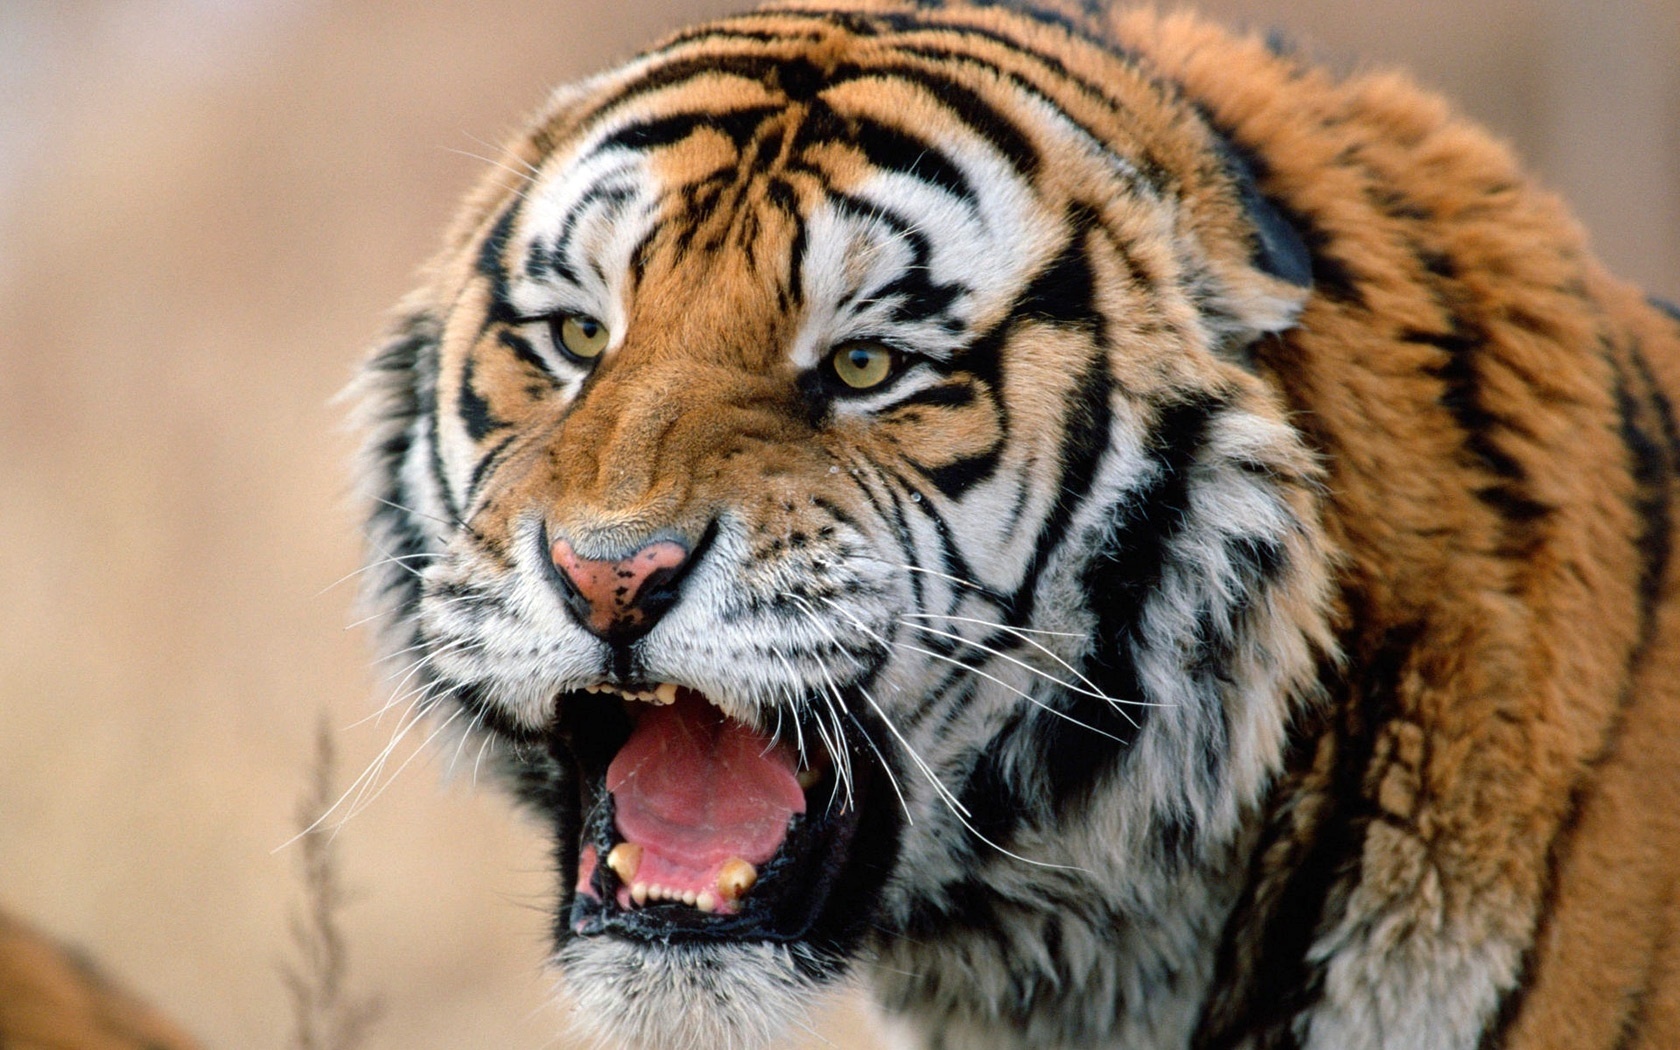 Tiger, Roar, Mouth, Aggression, Grin - Siberian Tiger - HD Wallpaper 